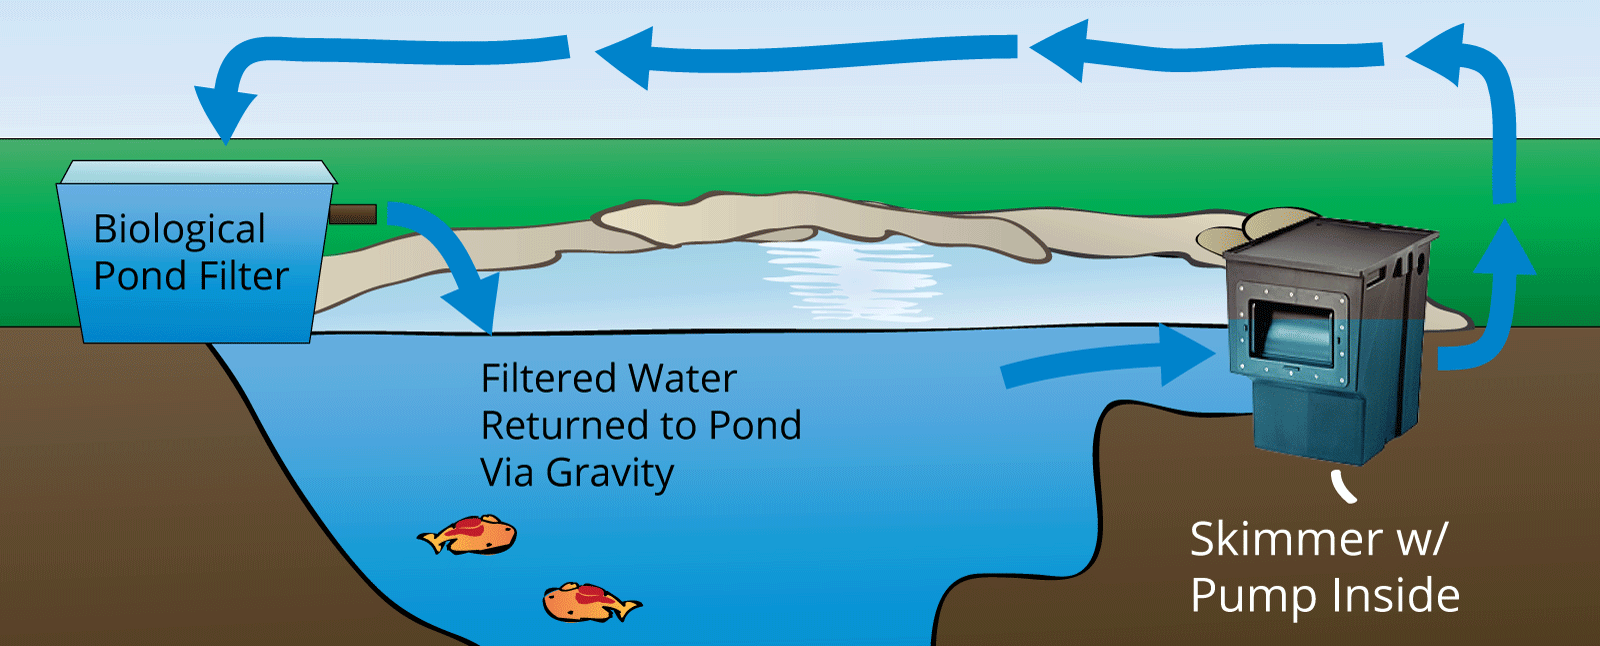 gravity-return-pond-filter